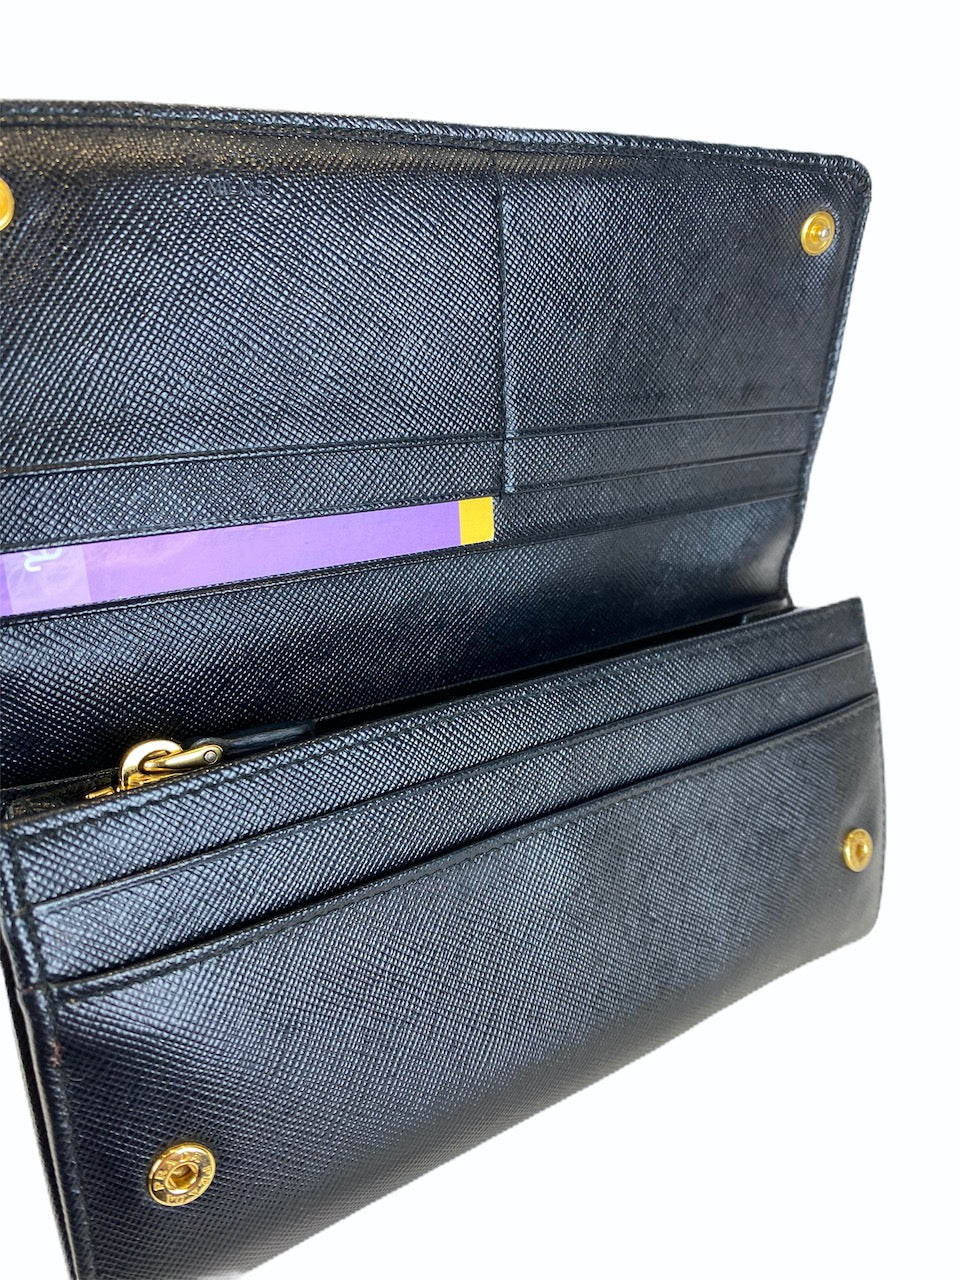 Prada Black Saffiano Leather Continental Wallet - As Seen on Instagram 2/9/20 - Siopaella Designer Exchange